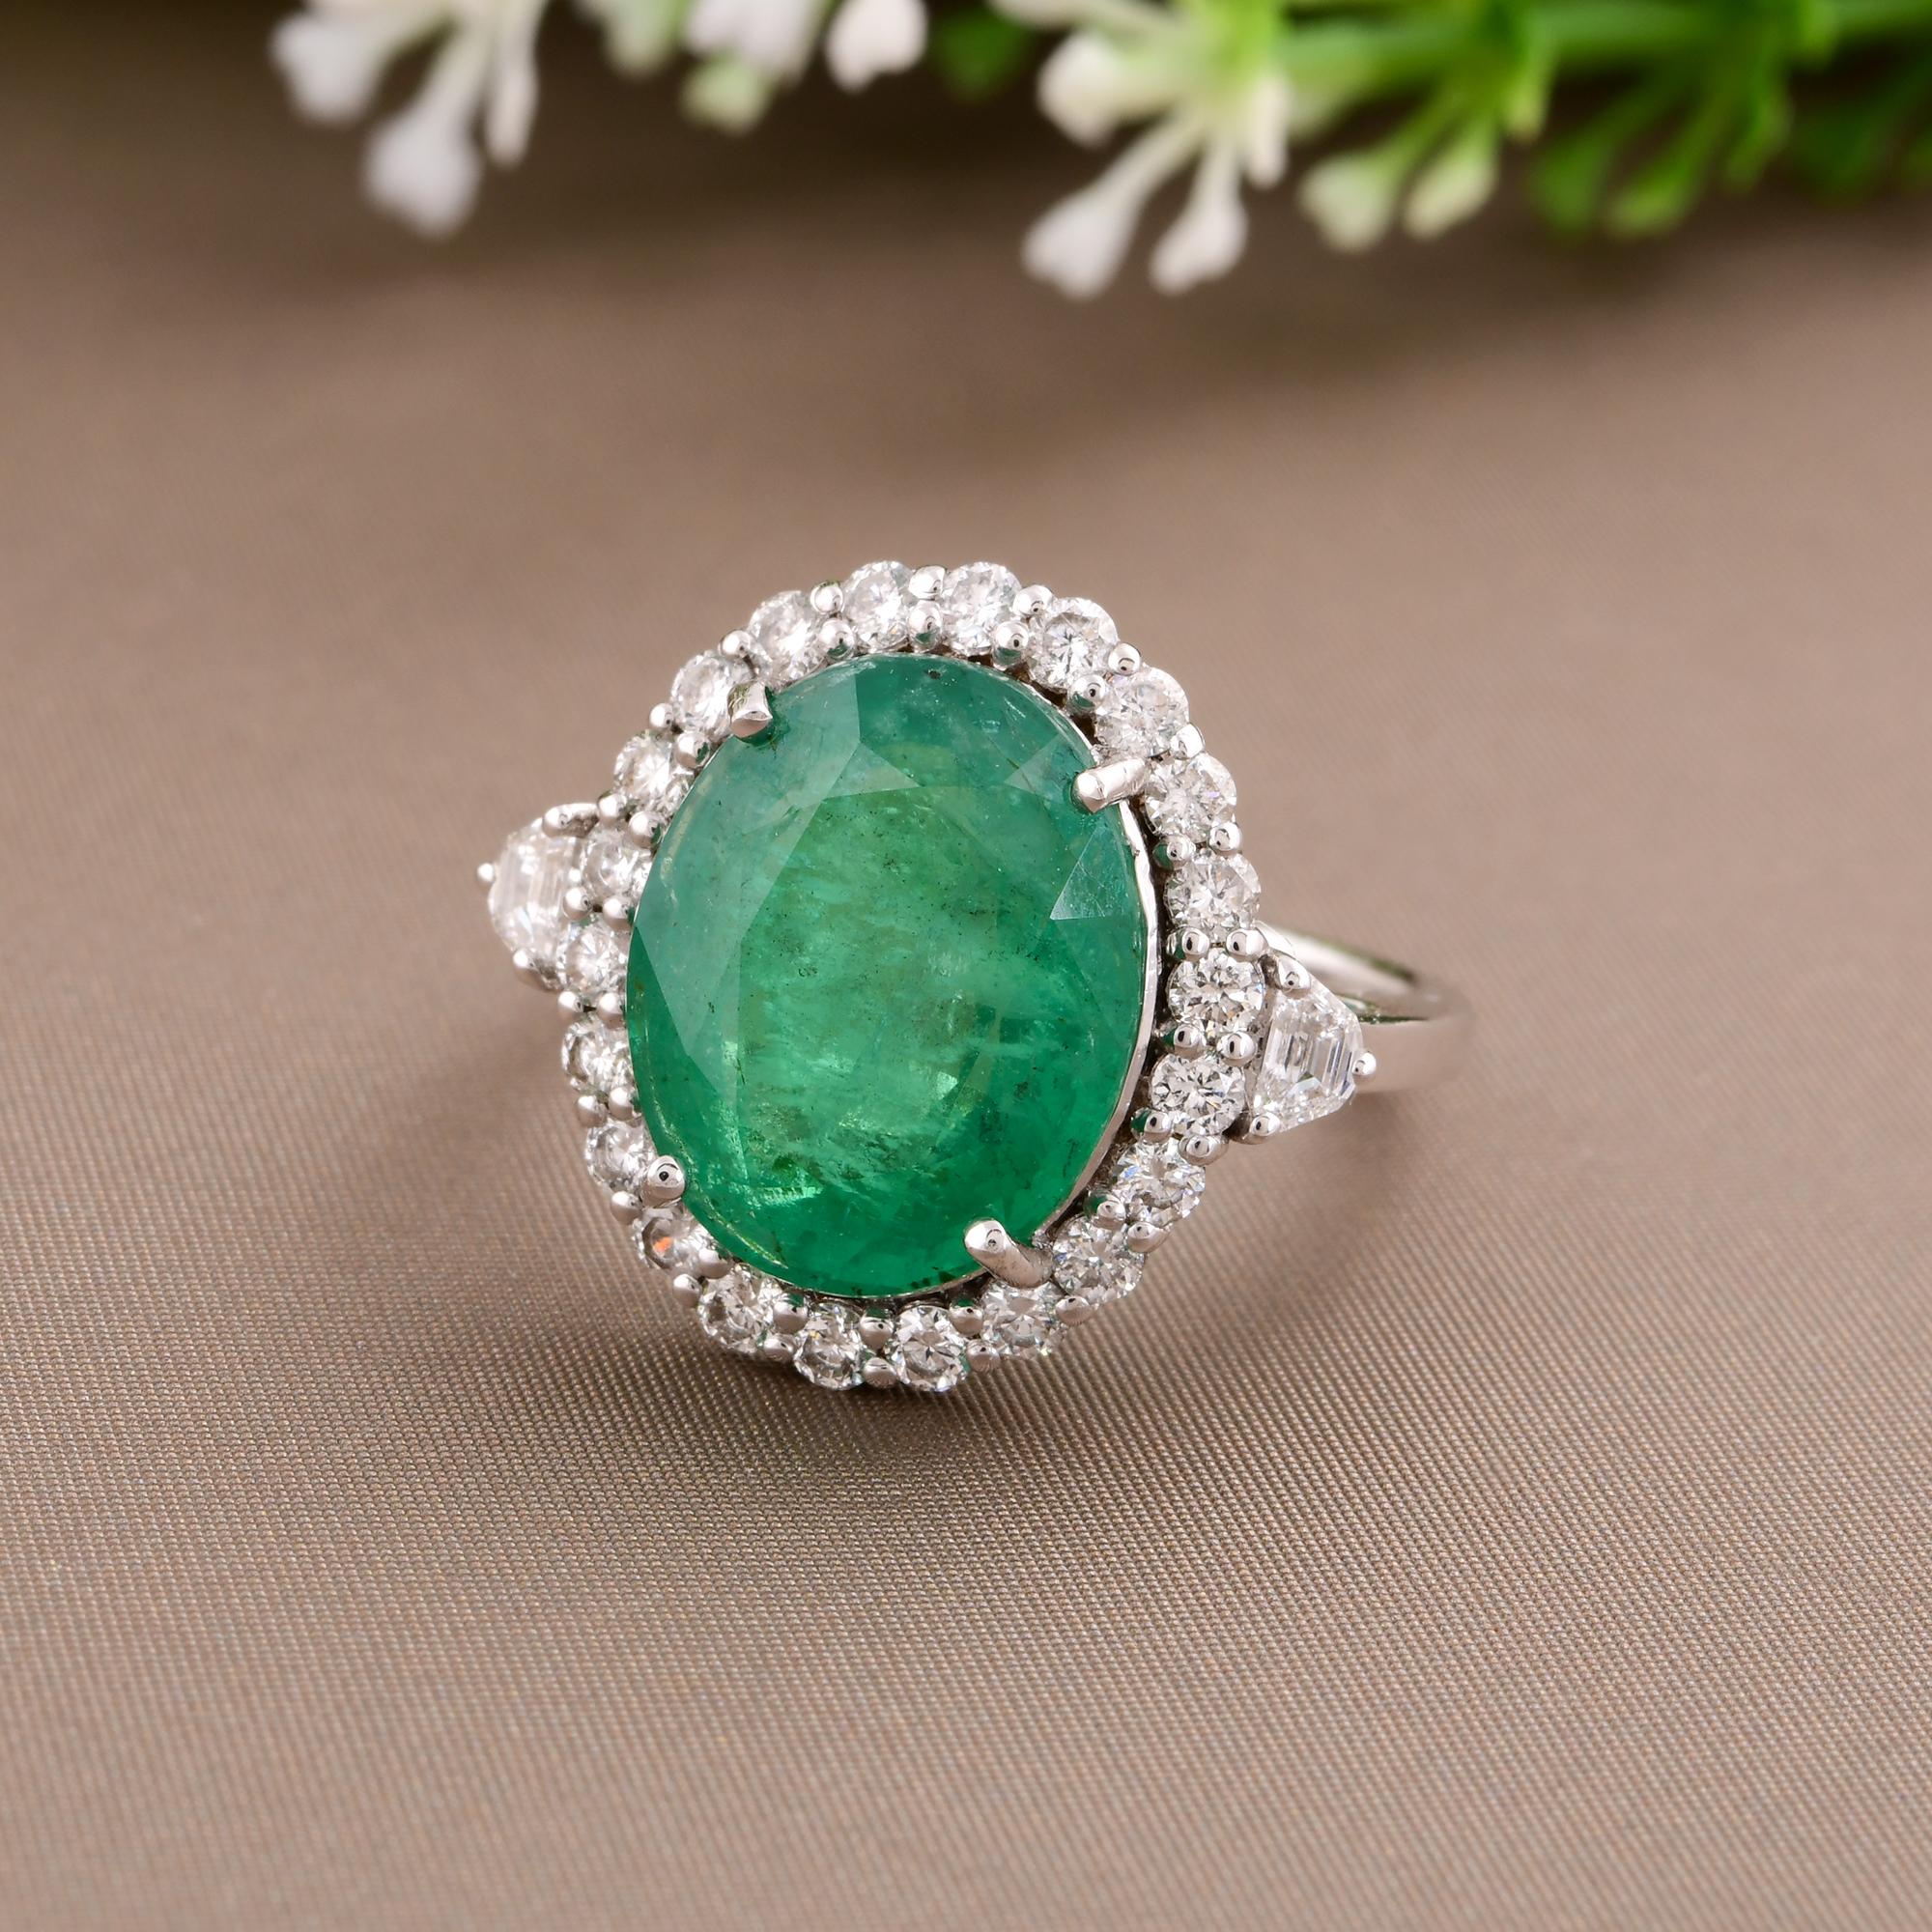 Oval Cut Zambian Emerald Gemstone Cocktail Ring Diamond 14 Karat White Gold Fine Jewelry For Sale